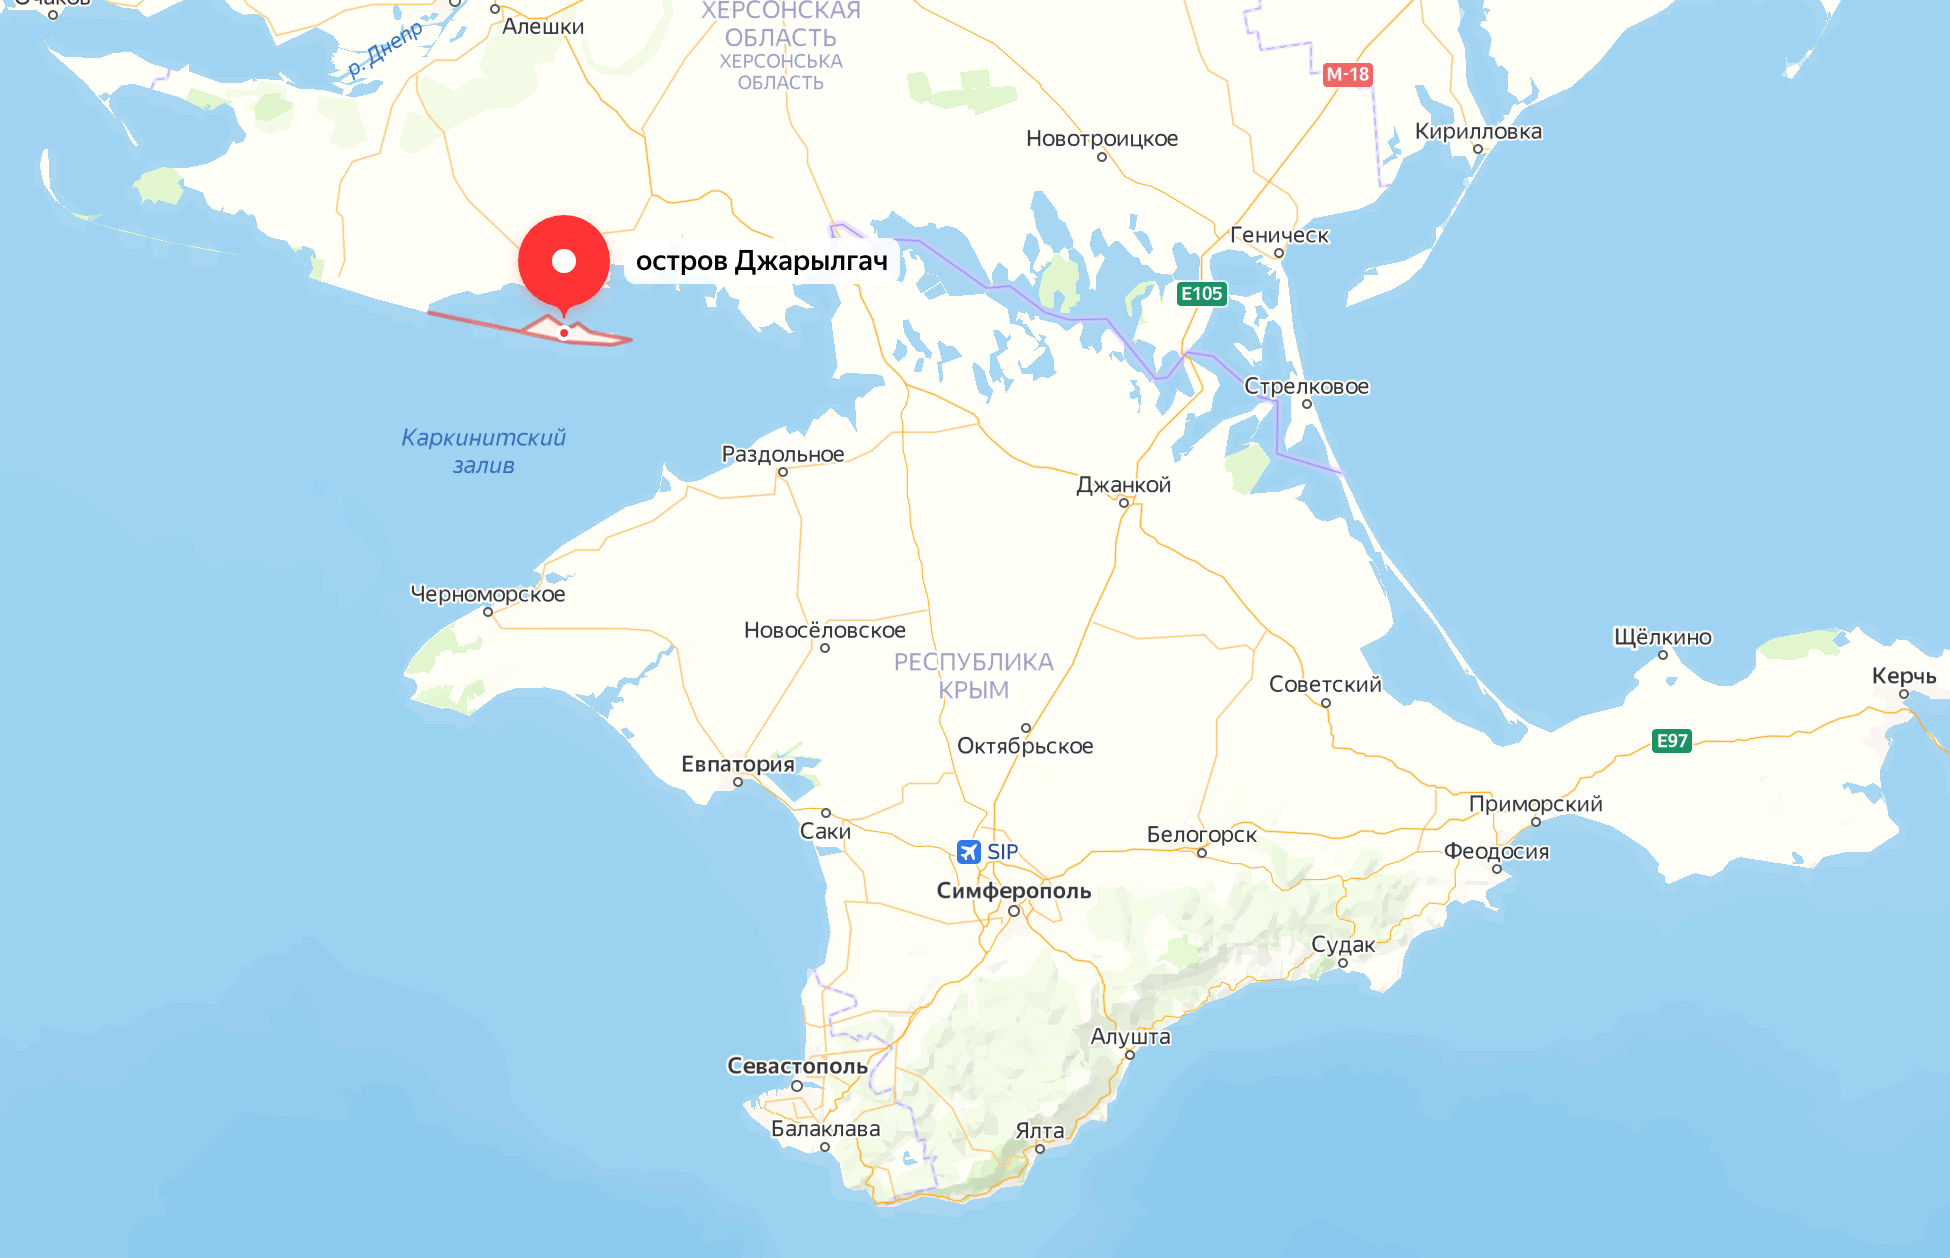 Площадь крыма в кв км. Крым остров змеиный на карте. Остров змеиный Украина в черном море на карте. Карта Украины остров змеиный остров. Джанкойский район на карте Крыма.